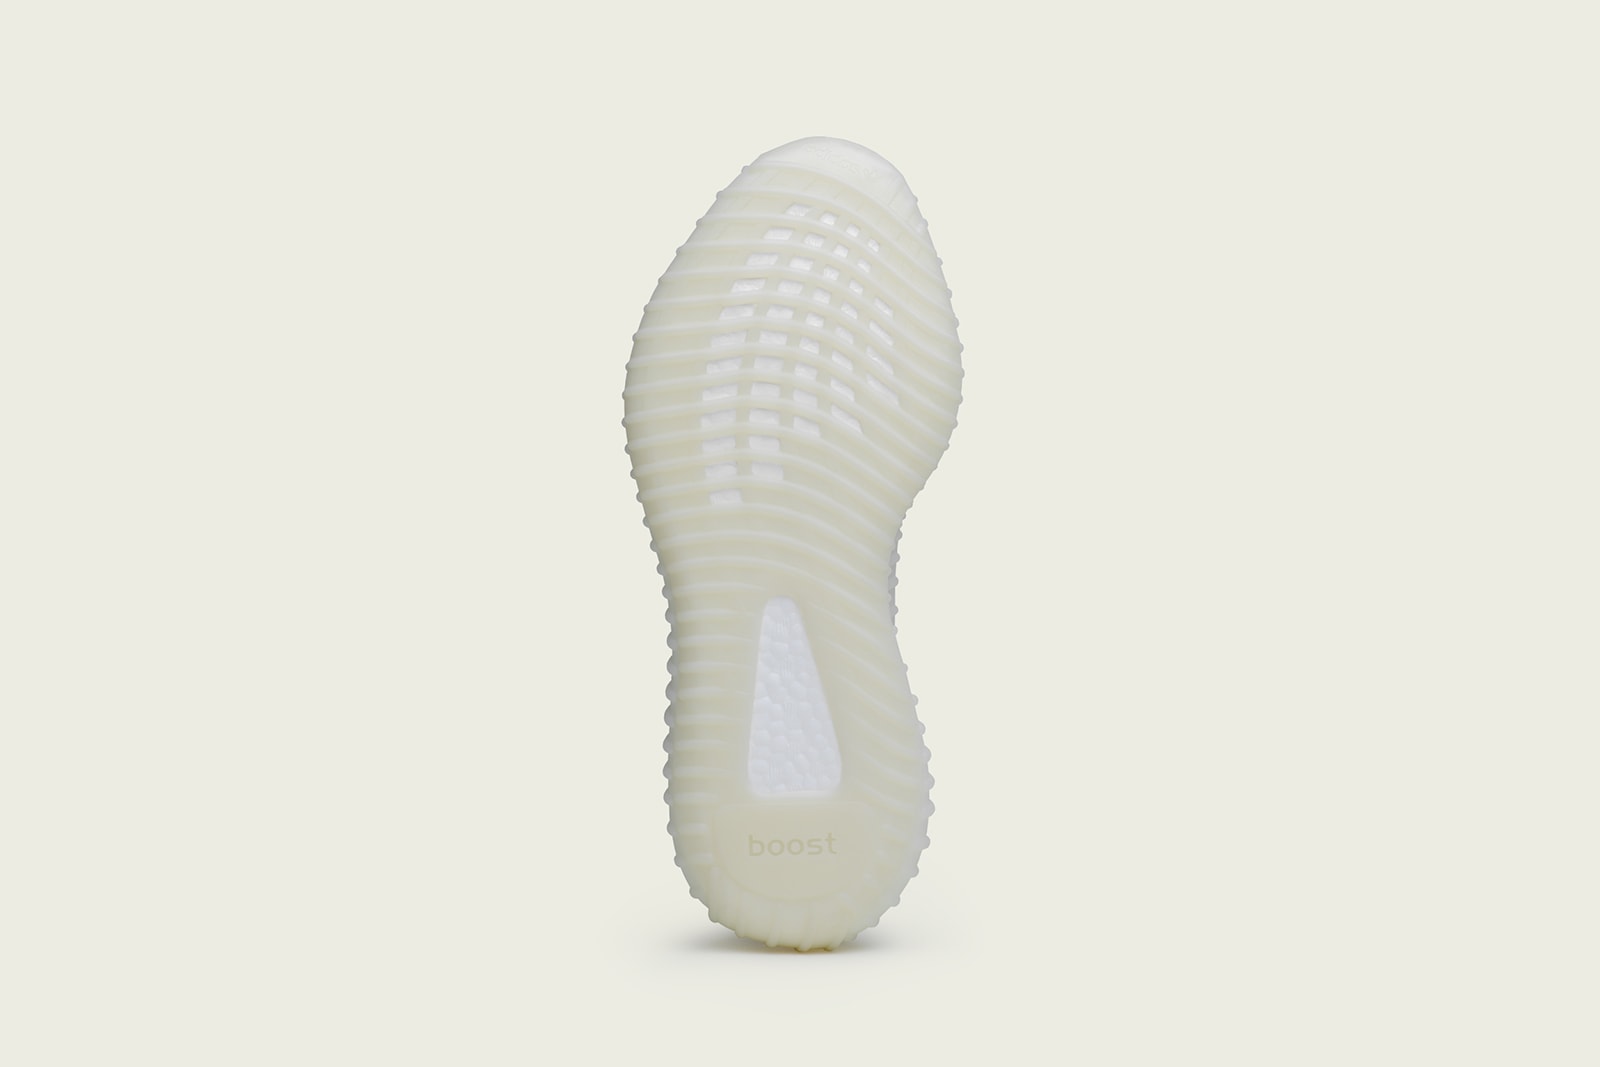 adidas Yeezy Boost 350 V2 Triple White Cream September Drop Details Kanye West Kim Kardashian Footwear Shoes Sneakers Kicks Trainers adidas